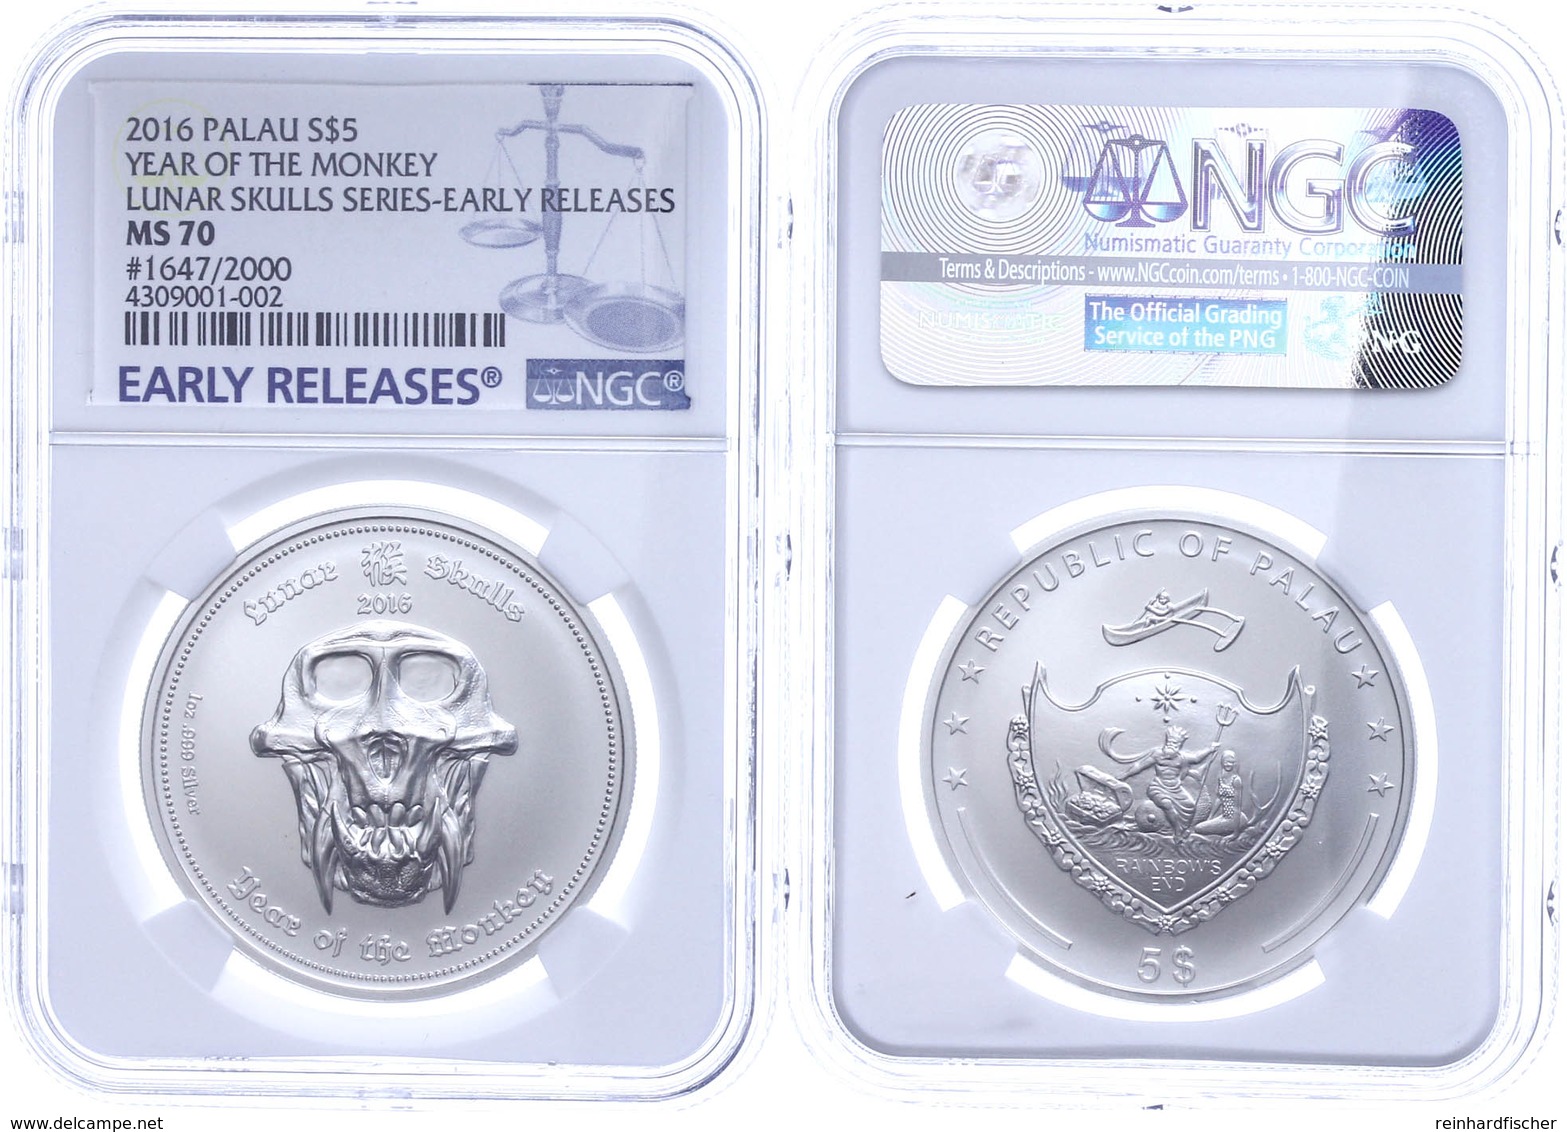 599 5 Dollars, 2015, Lunar Skulls Series-Year Of The Monkey, In Slab Der NGC Mit Der Bewertung MS70, Early Releases. - Palau